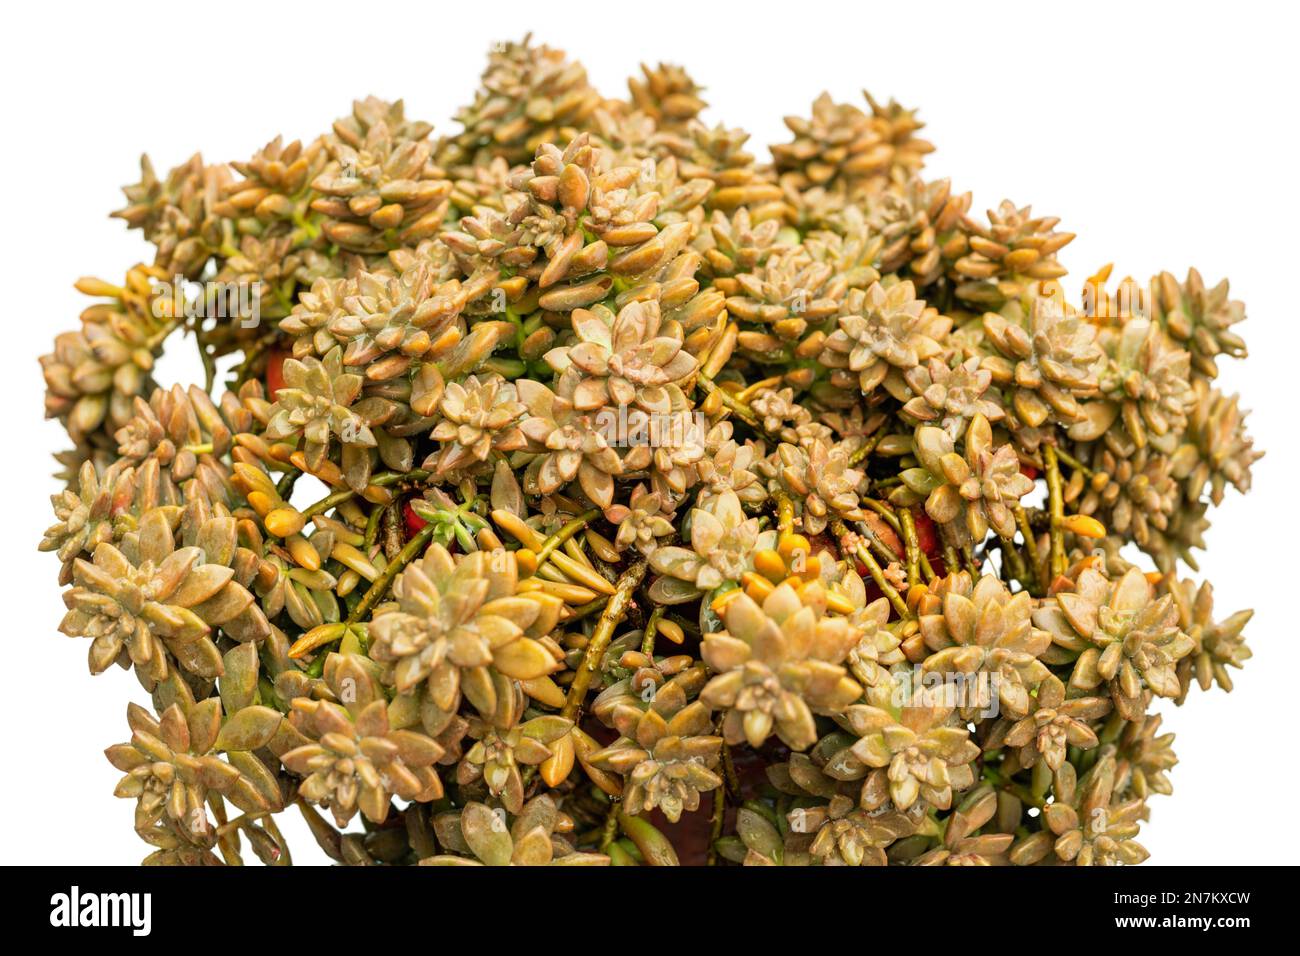 Graptosedum succulent plants closeup view Stock Photo